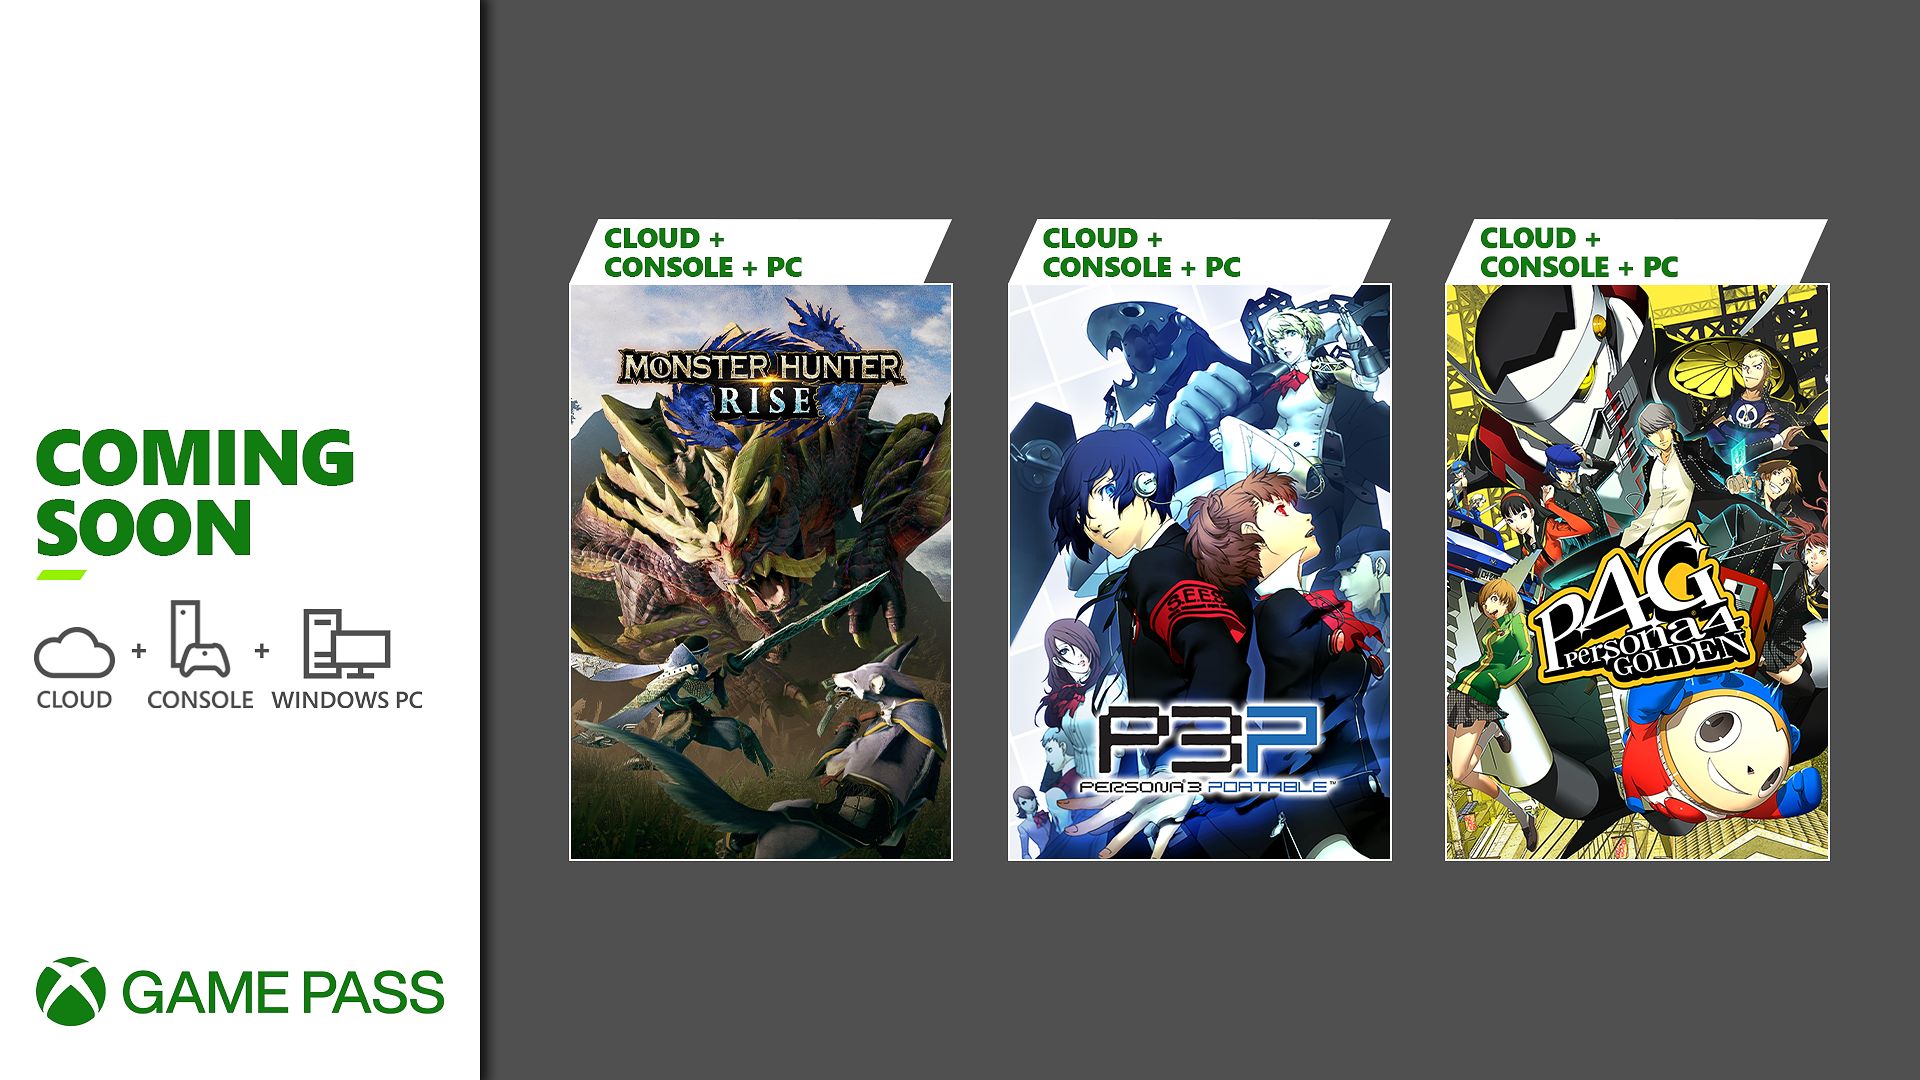 Bald im Xbox Game Pass: Monster Hunter Rise, Persona 3 Portable, Persona 4 Golden und mehr HERO